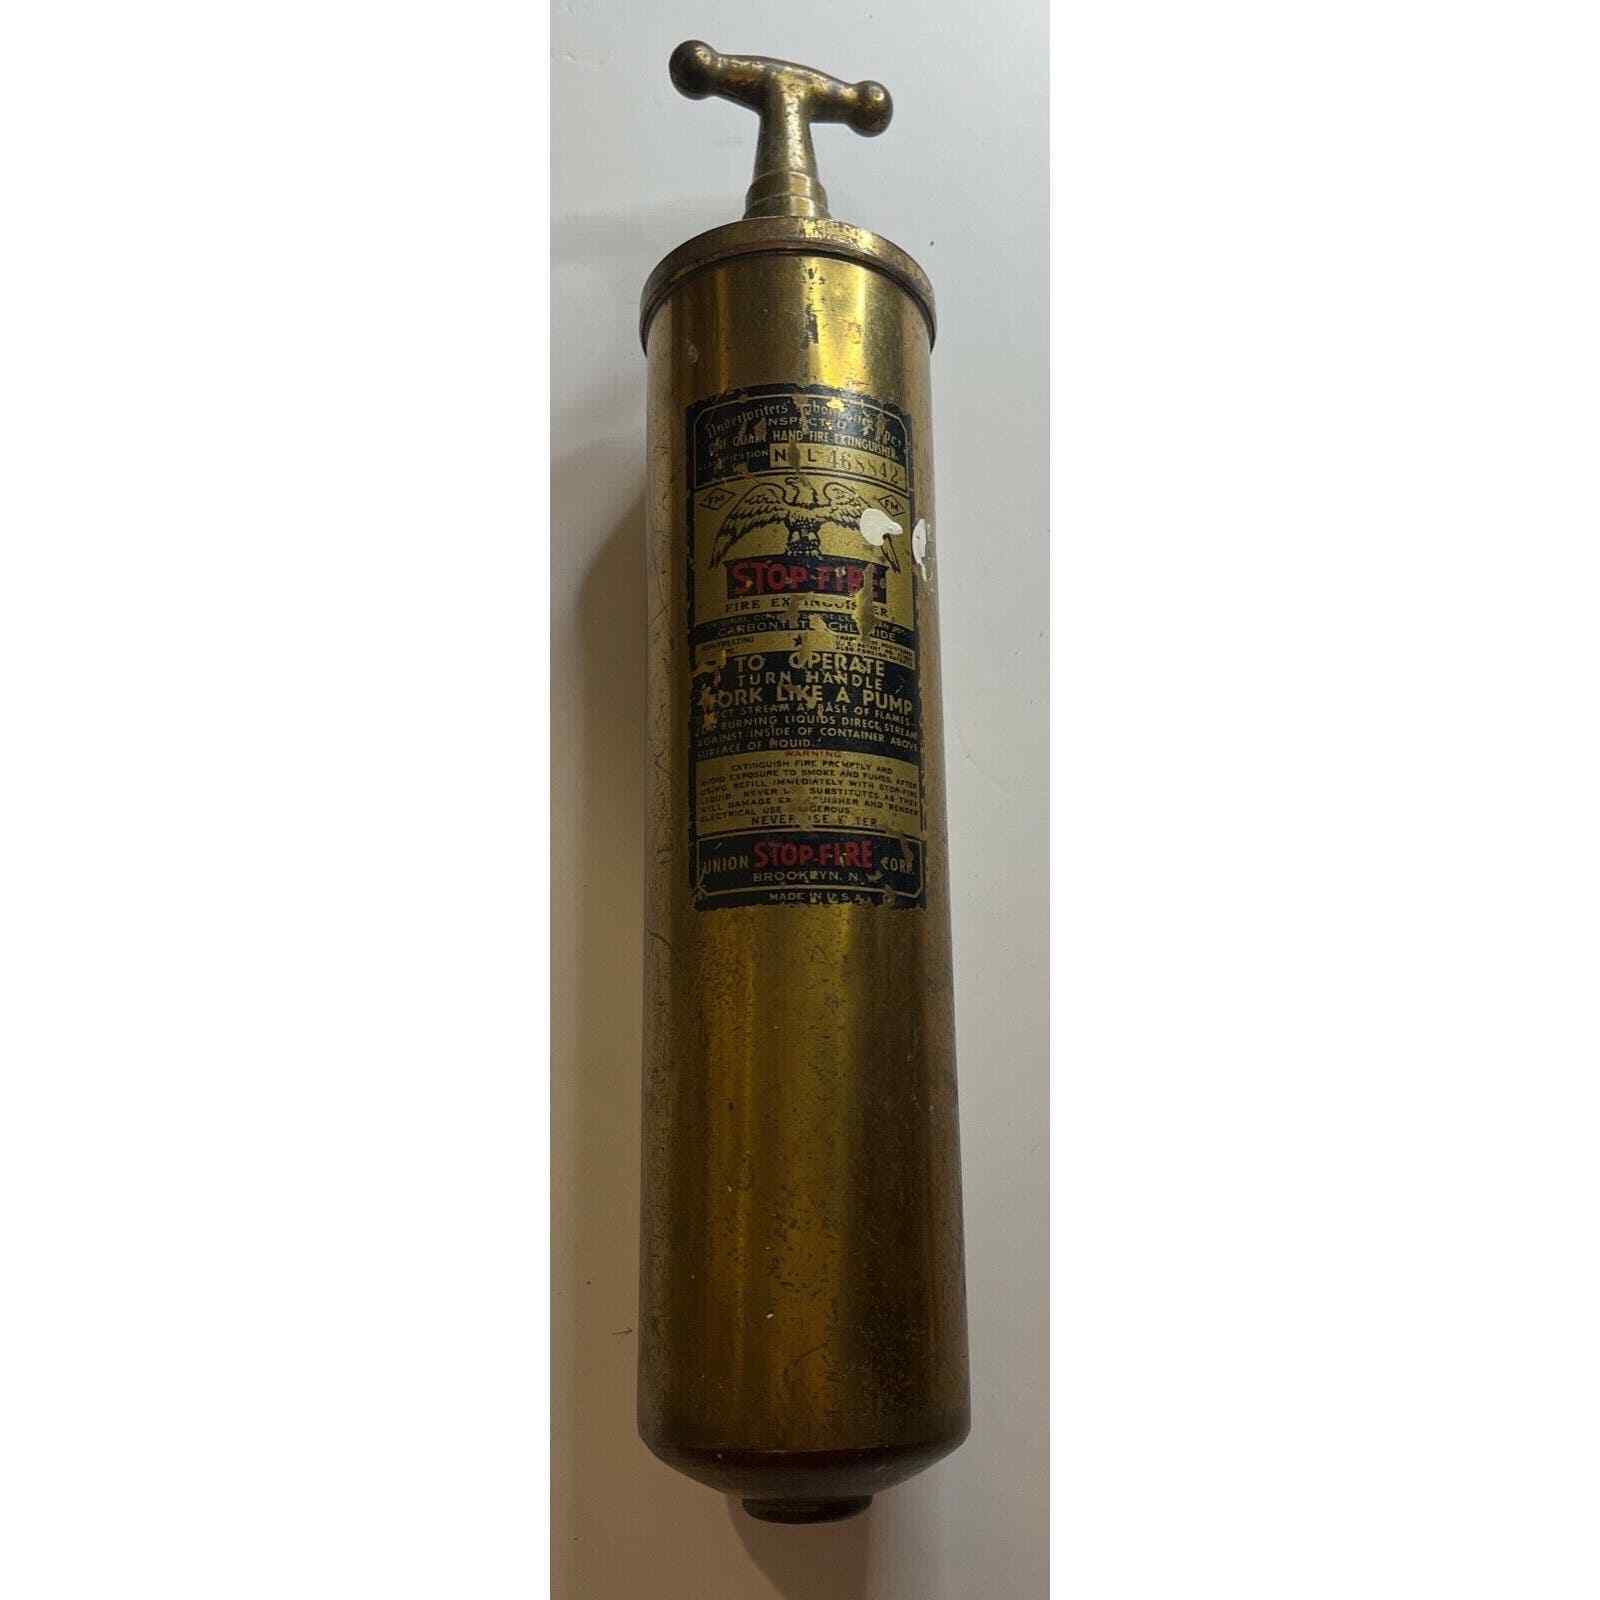 Vintage Union Stop-Fire Co. empty hand pump brass fire extinguisher